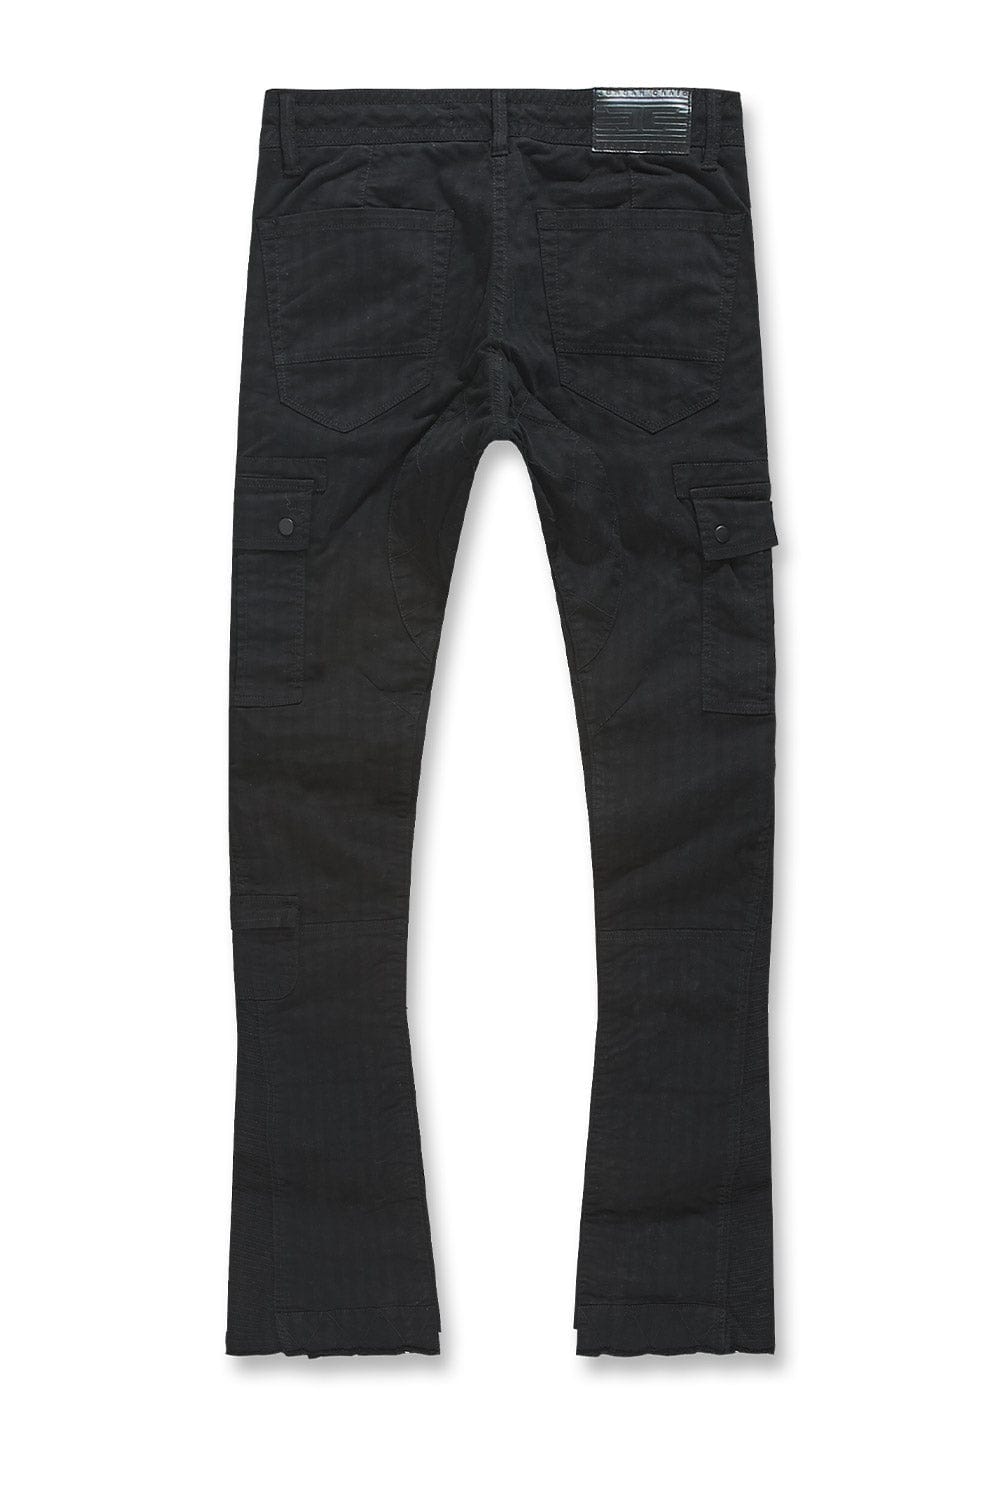 Sean Stacked - Aviation Cargo Pants (Black)